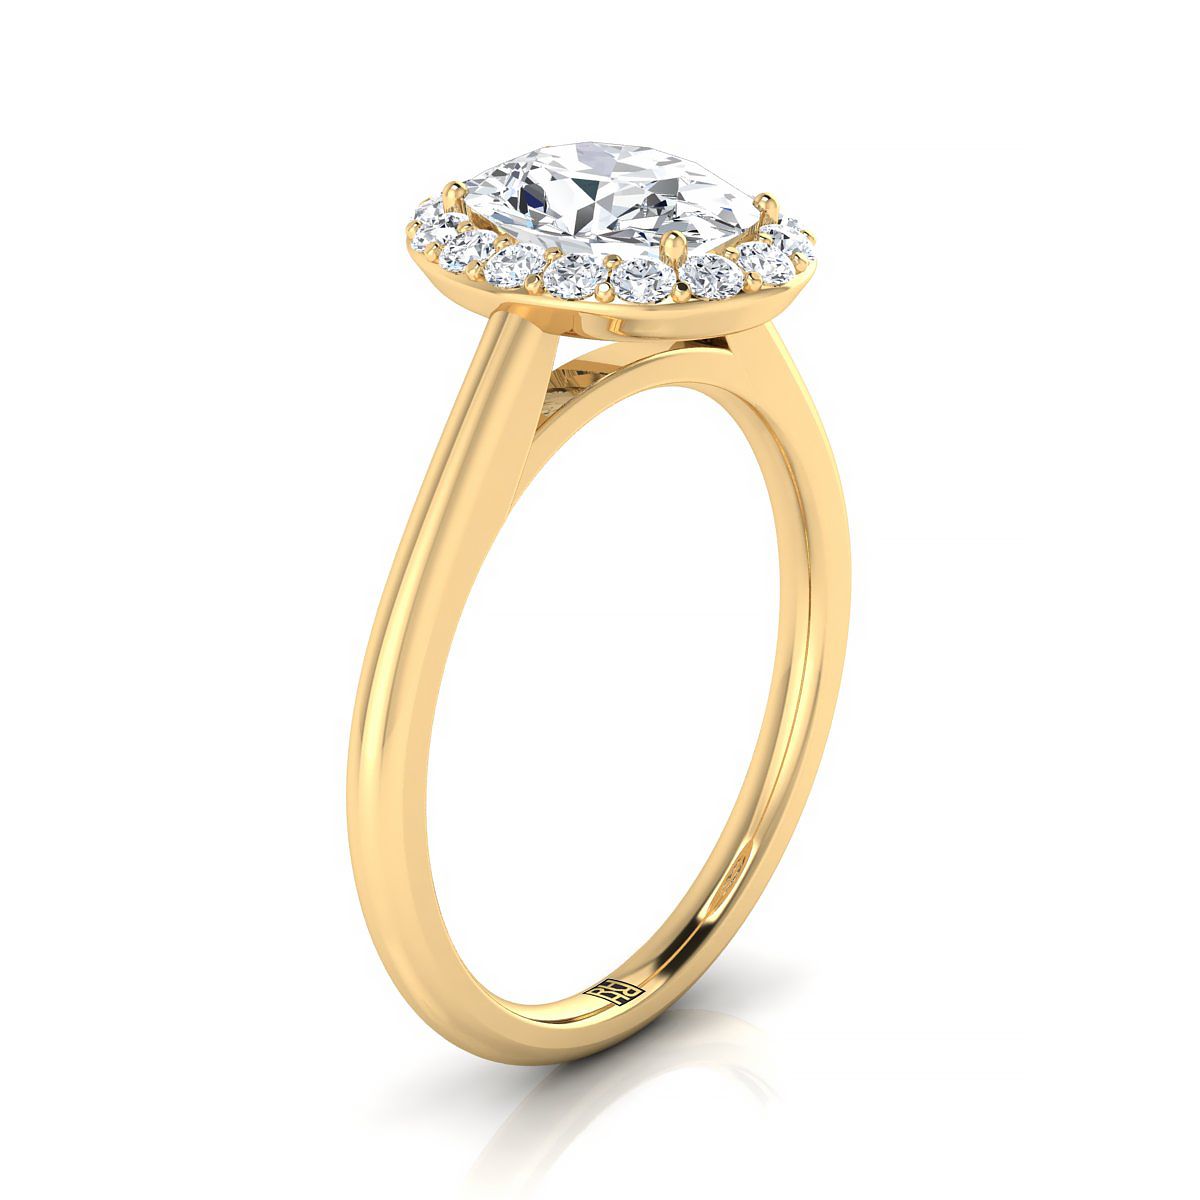 14K Yellow Gold Oval Garnet Shared Prong Diamond Halo Engagement Ring -1/5ctw